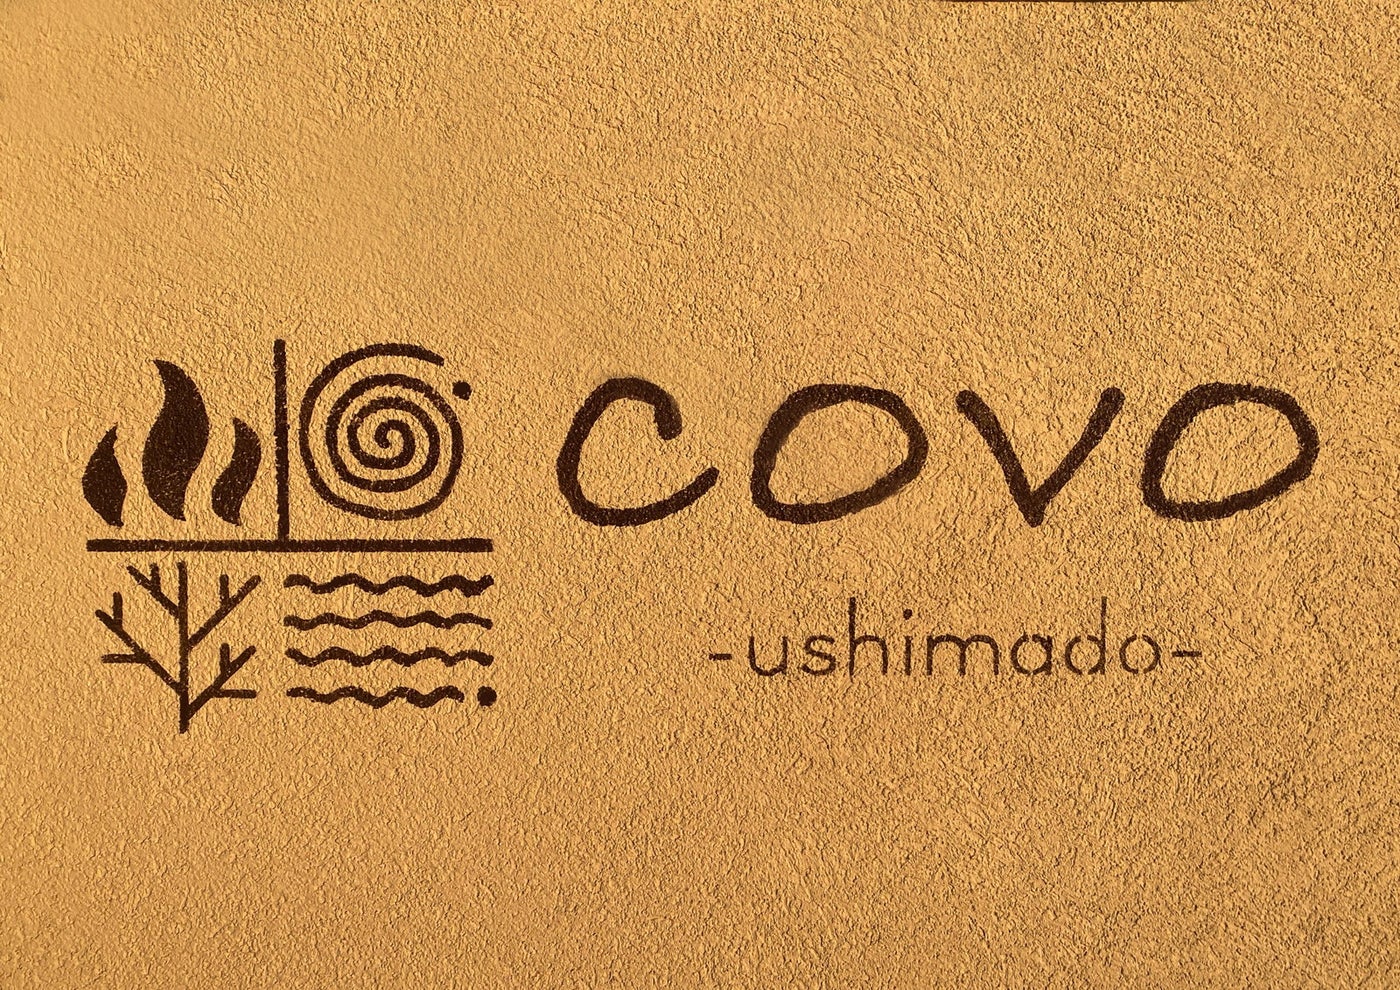 COVO USHIMADO -コヴォ牛窓-／提供画像